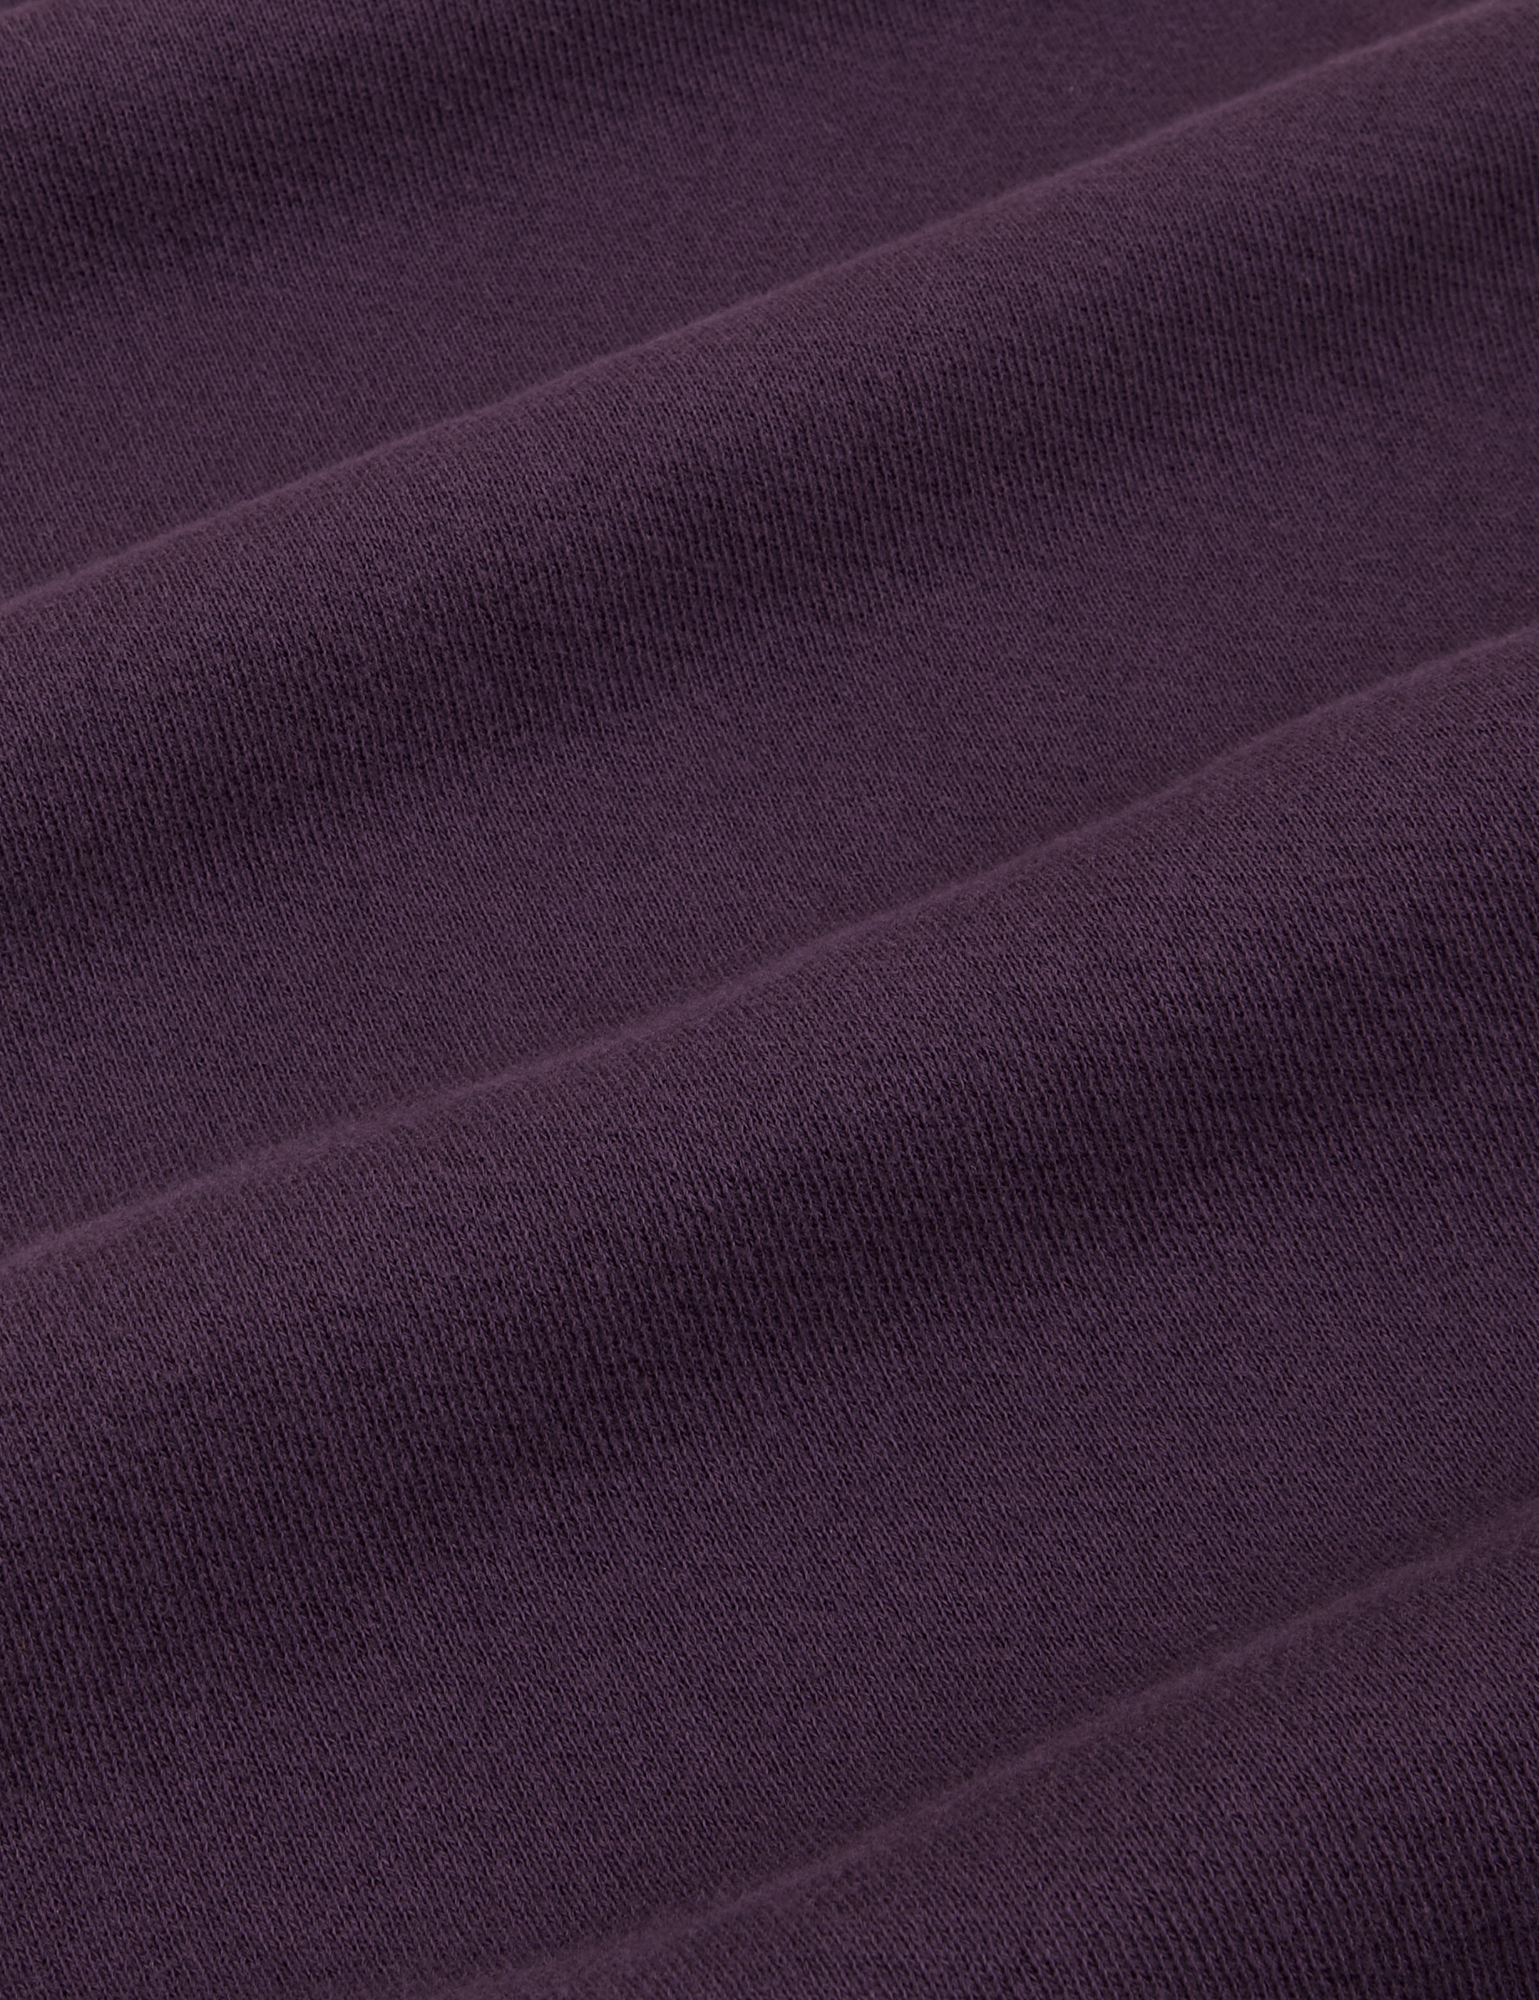 Rolled Cuff Sweat Pants in Nebula Purple fabric detail close up